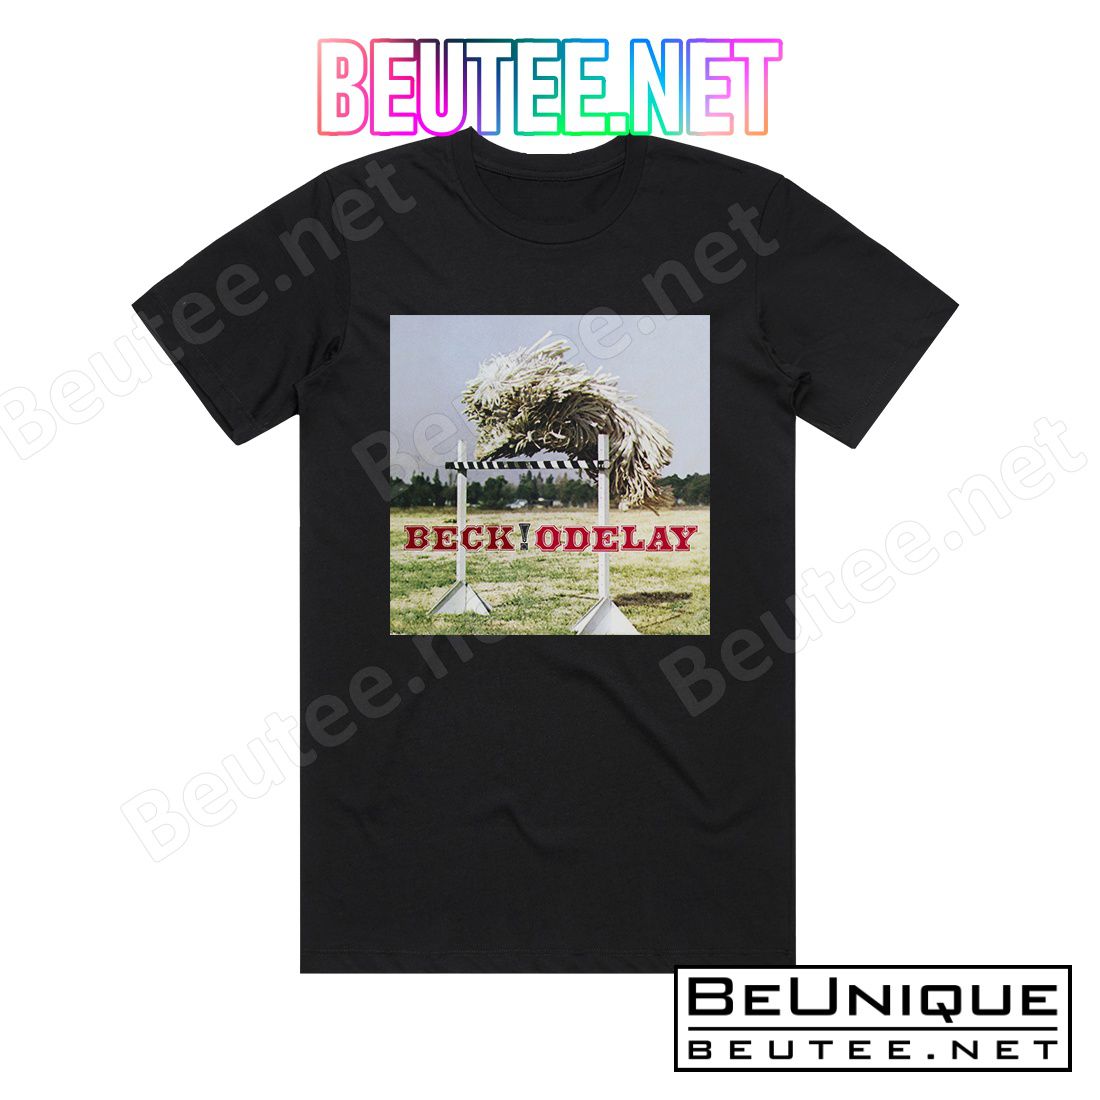 Beck Odelay Album Cover T-Shirt